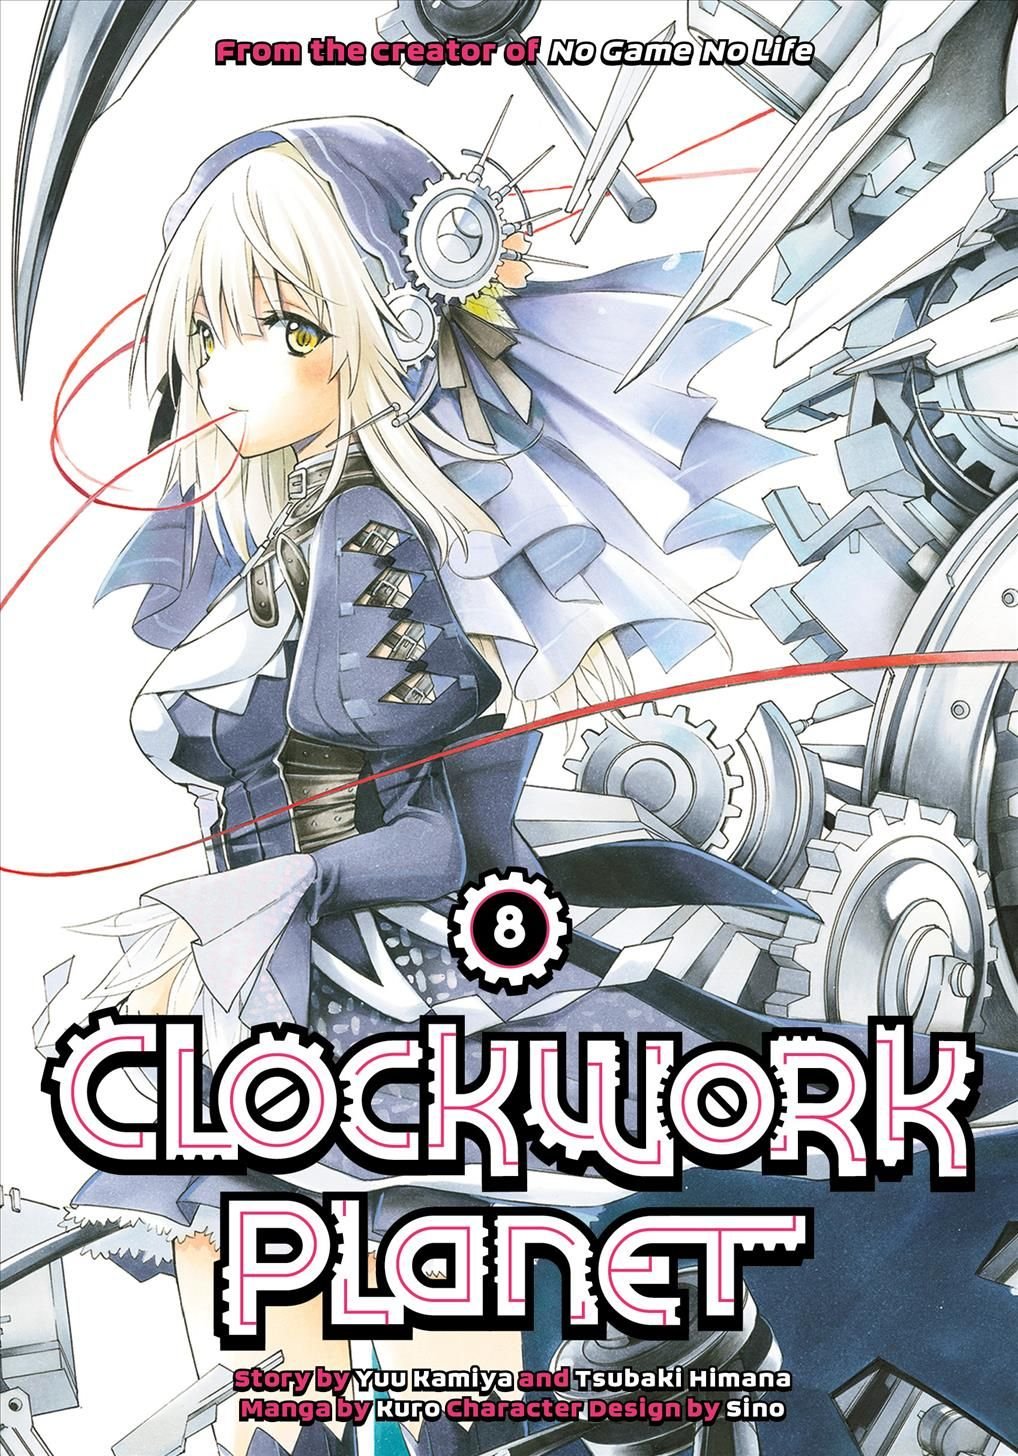 Clockwork Planet Art